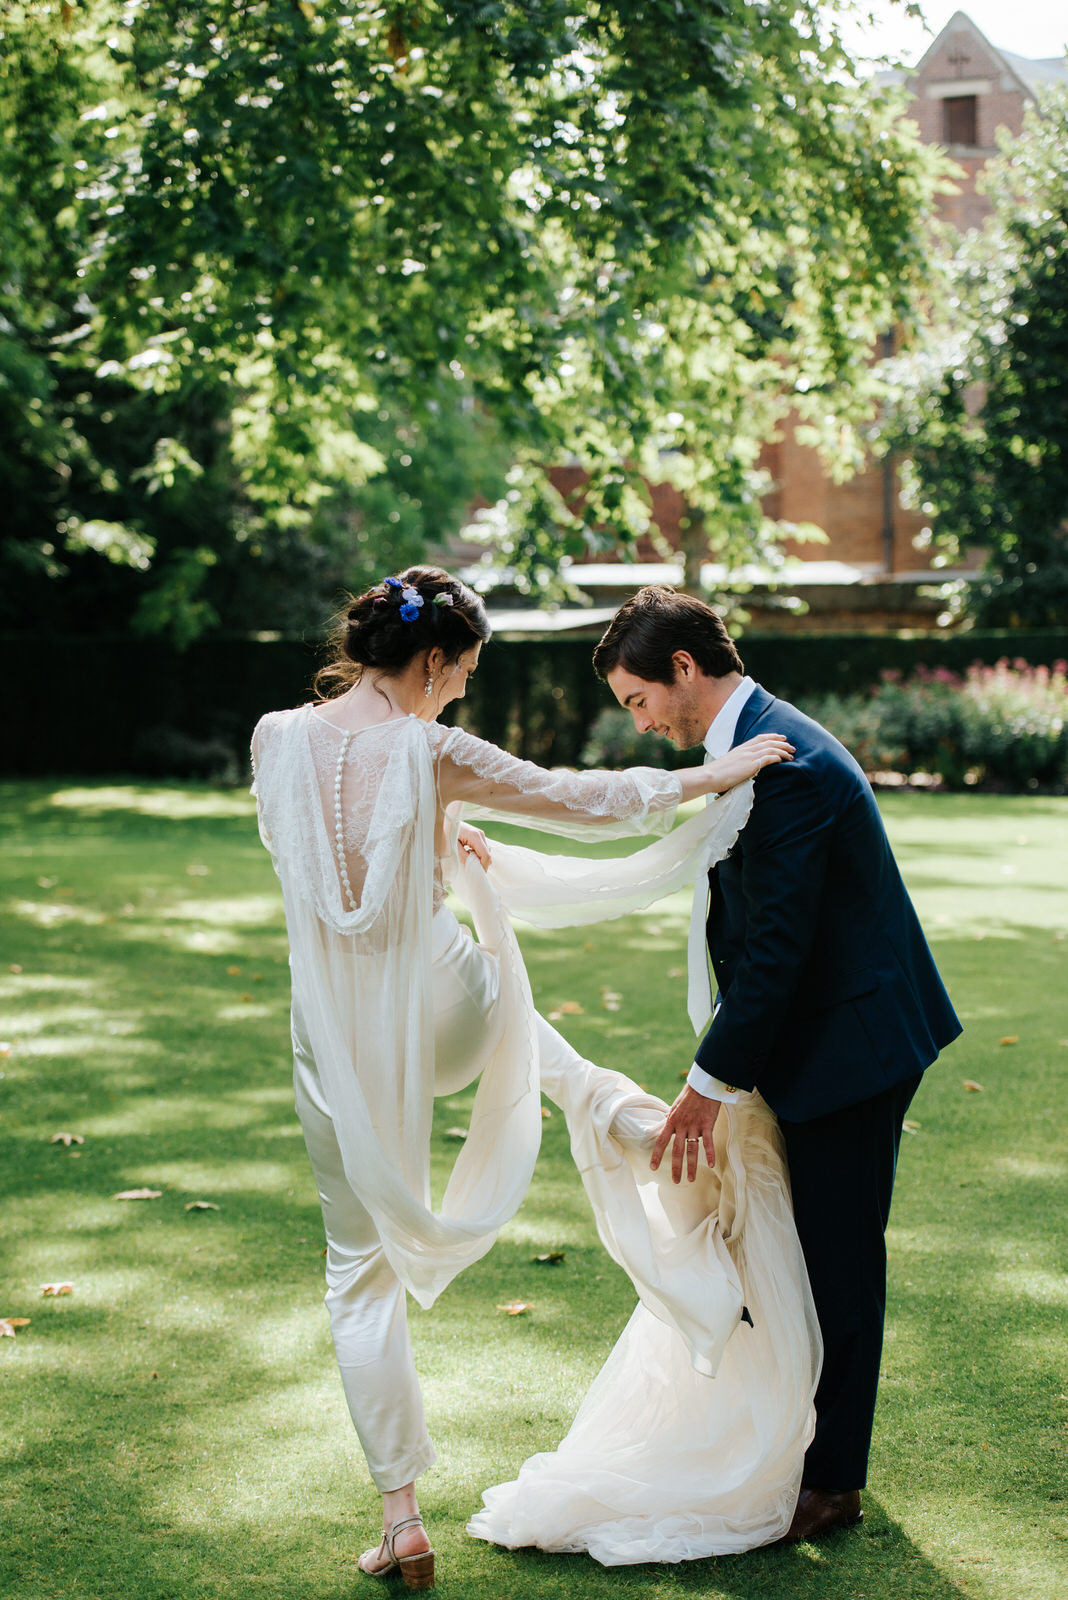 Groom helps bride take off her skirt to reveal wedding dress und